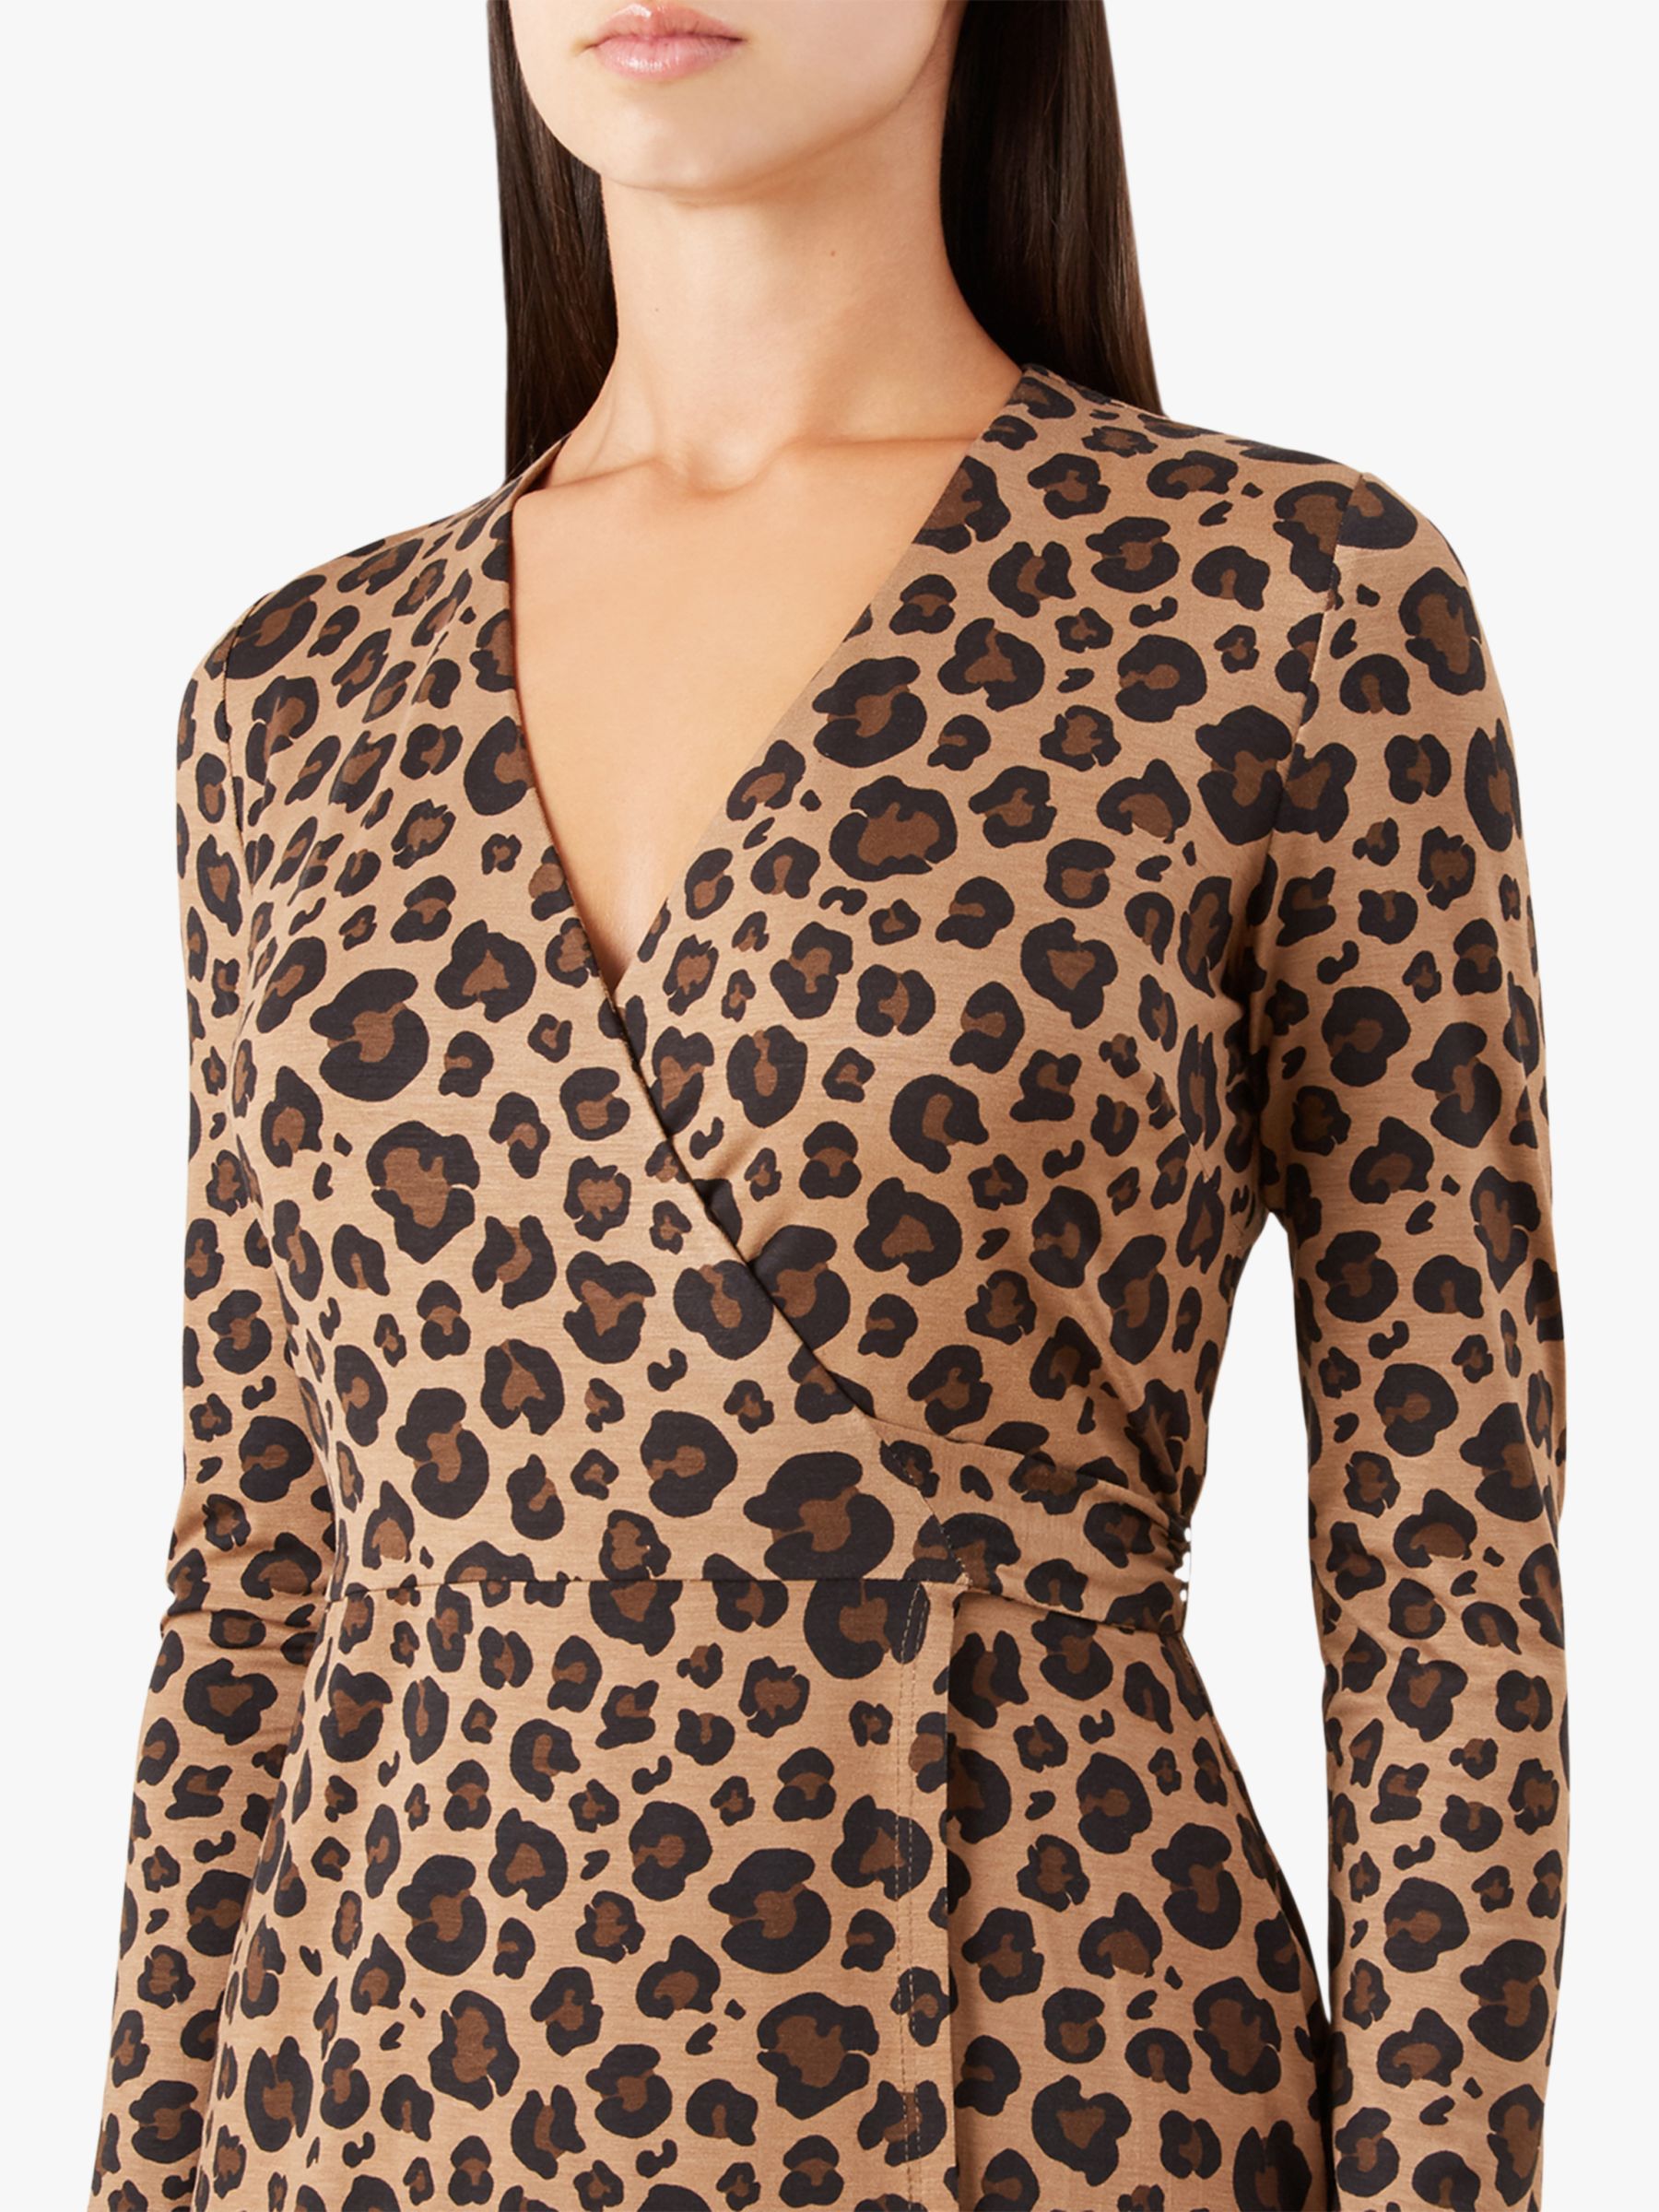 hobbs leopard print dress